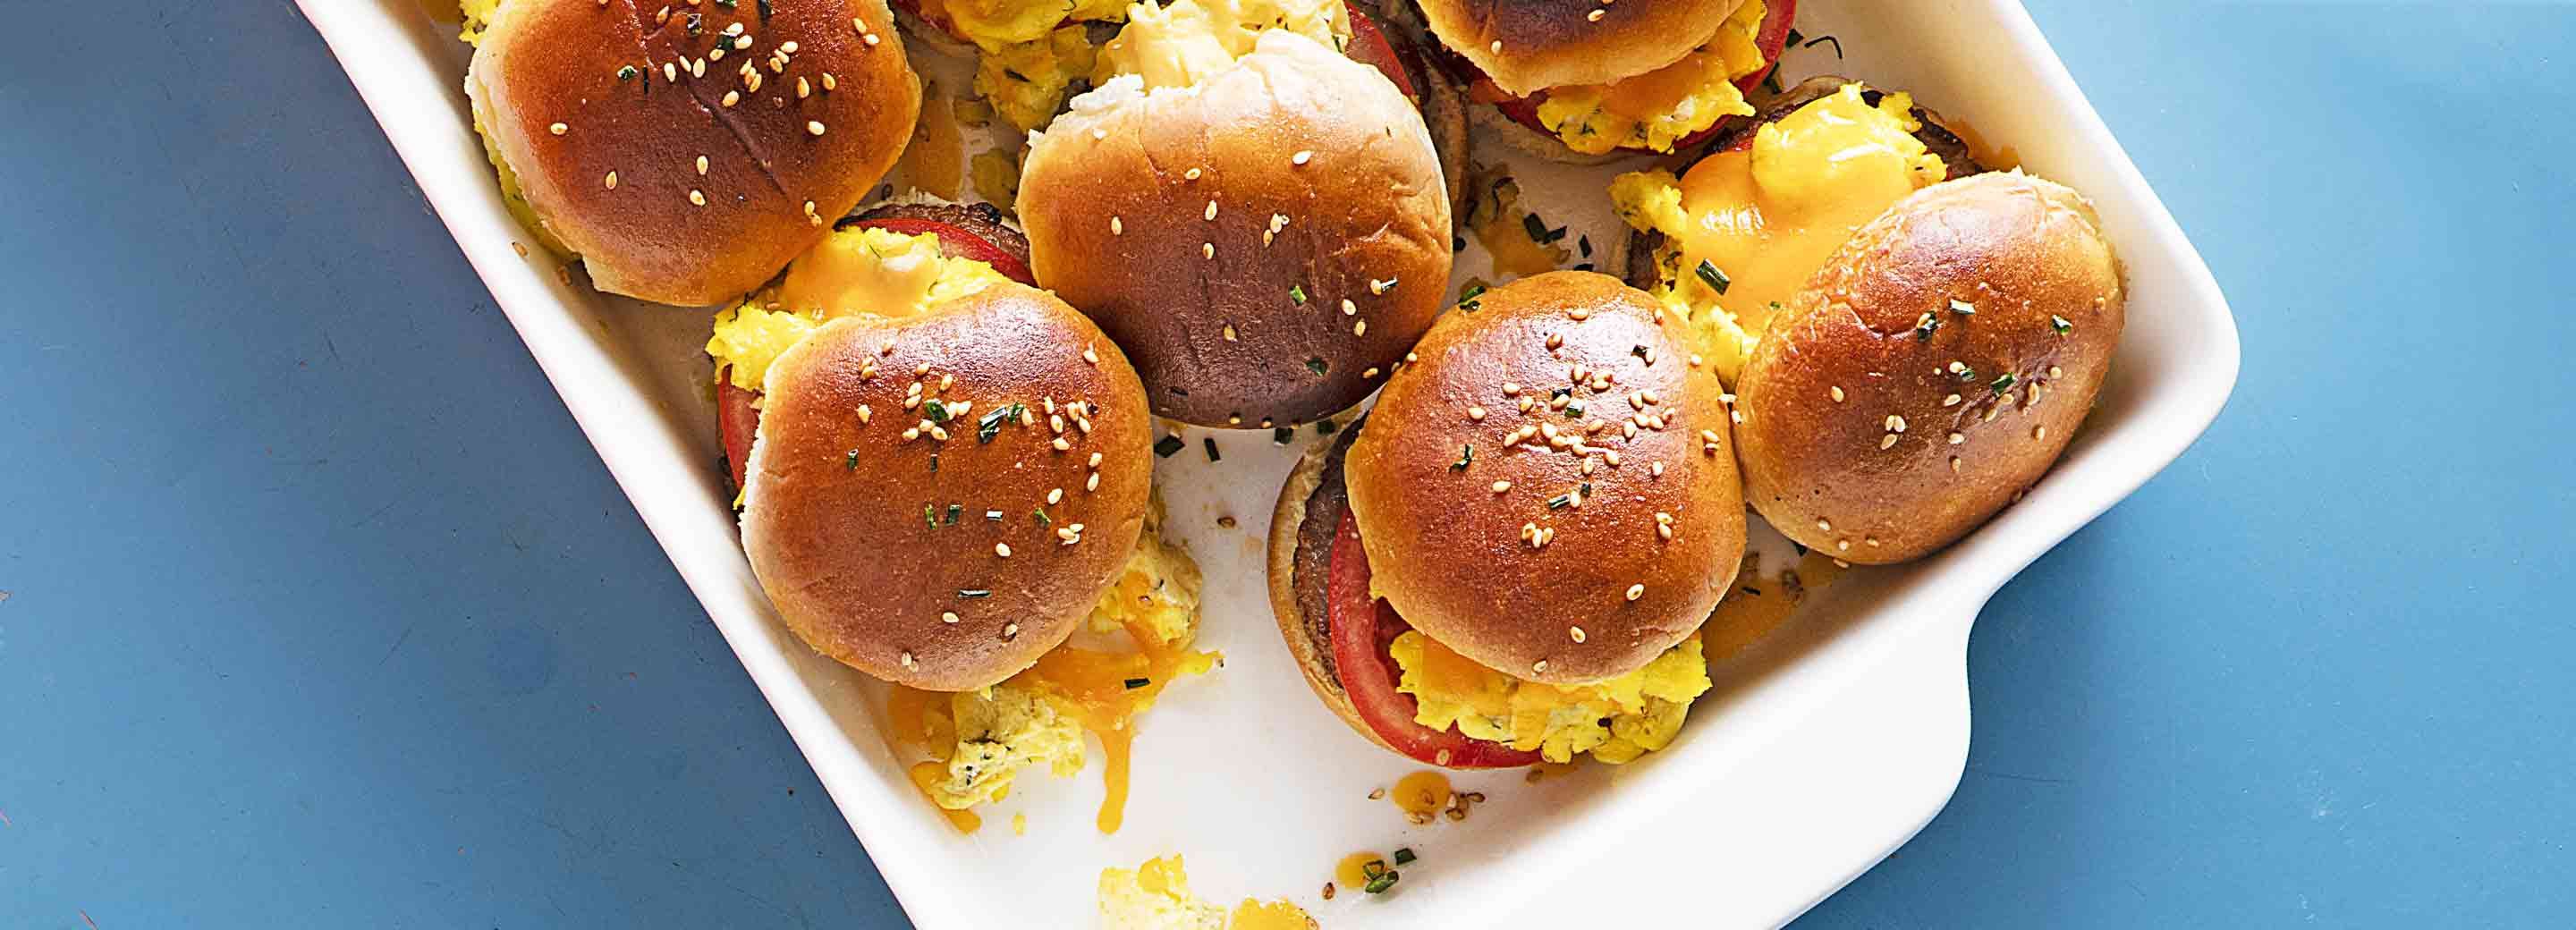 Egg and Sausage Breakfast Sliders